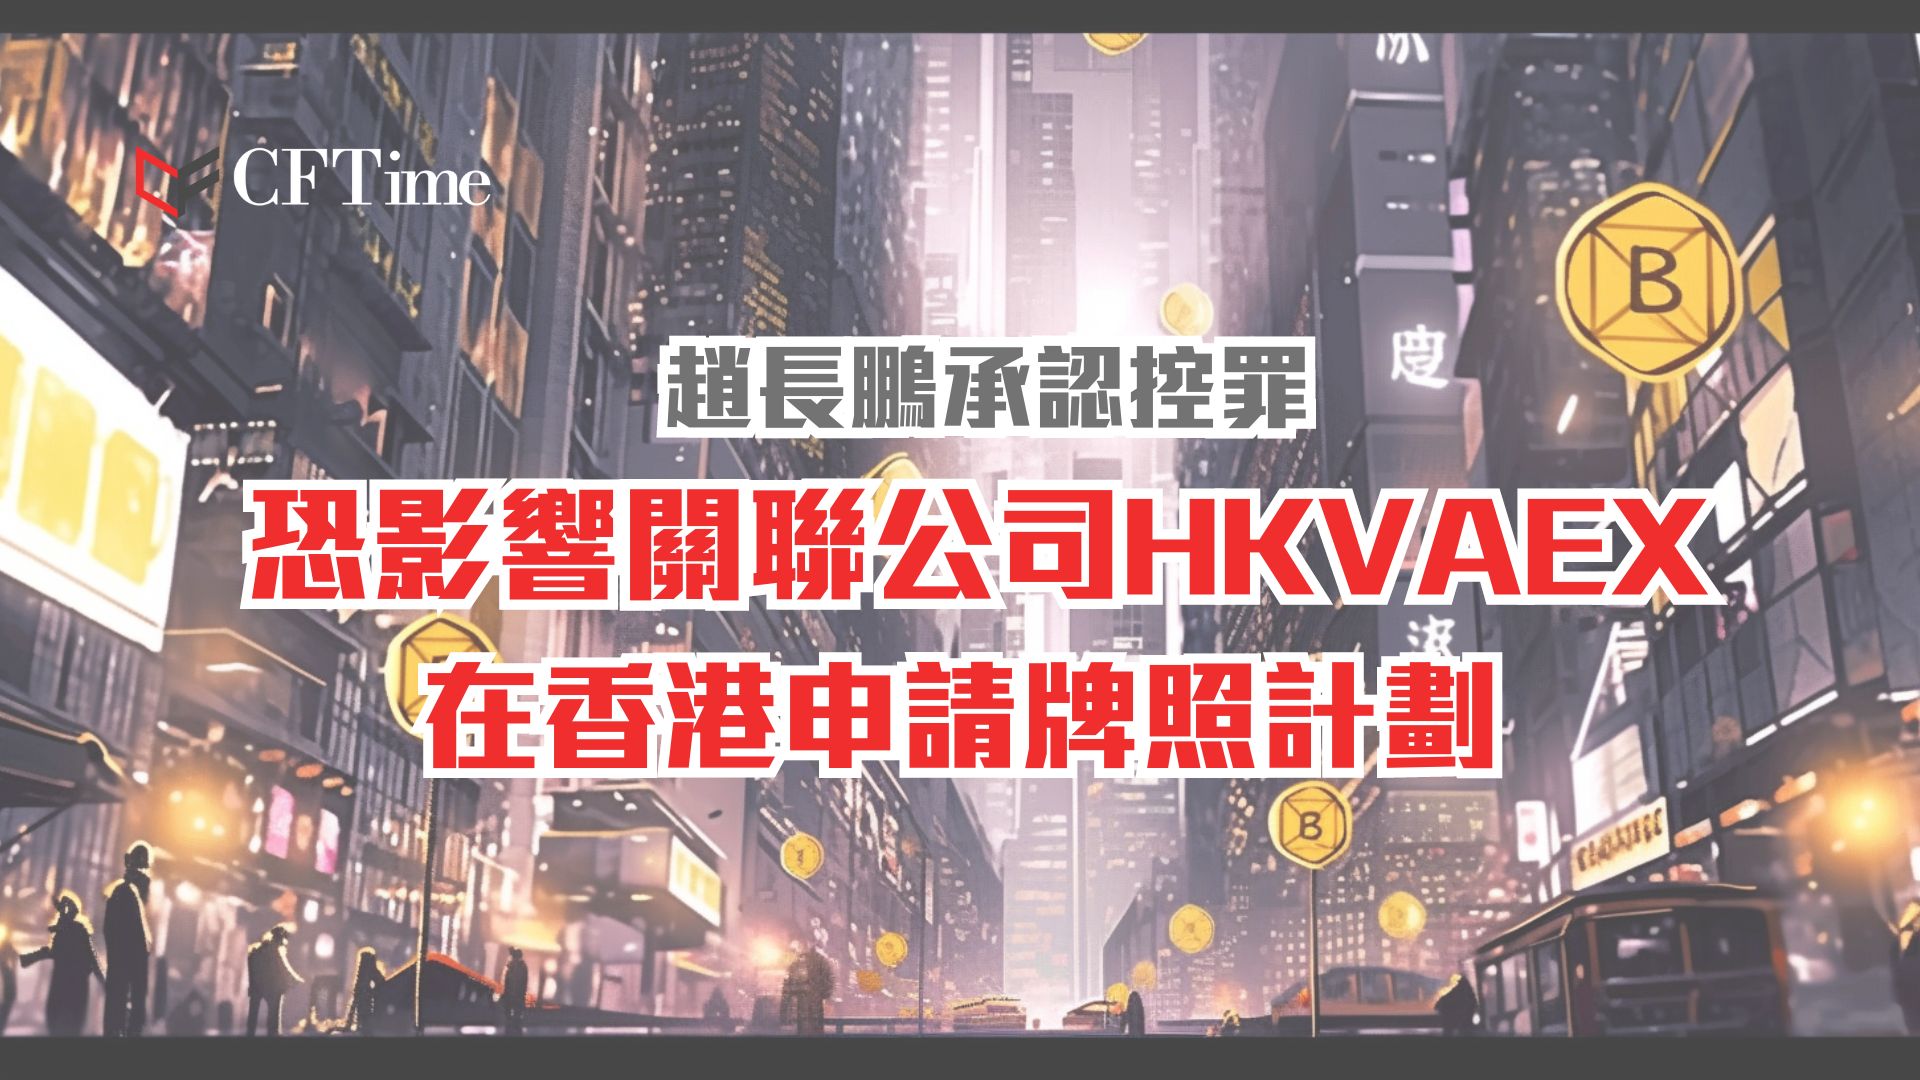 HKVAEX在香港申請牌照